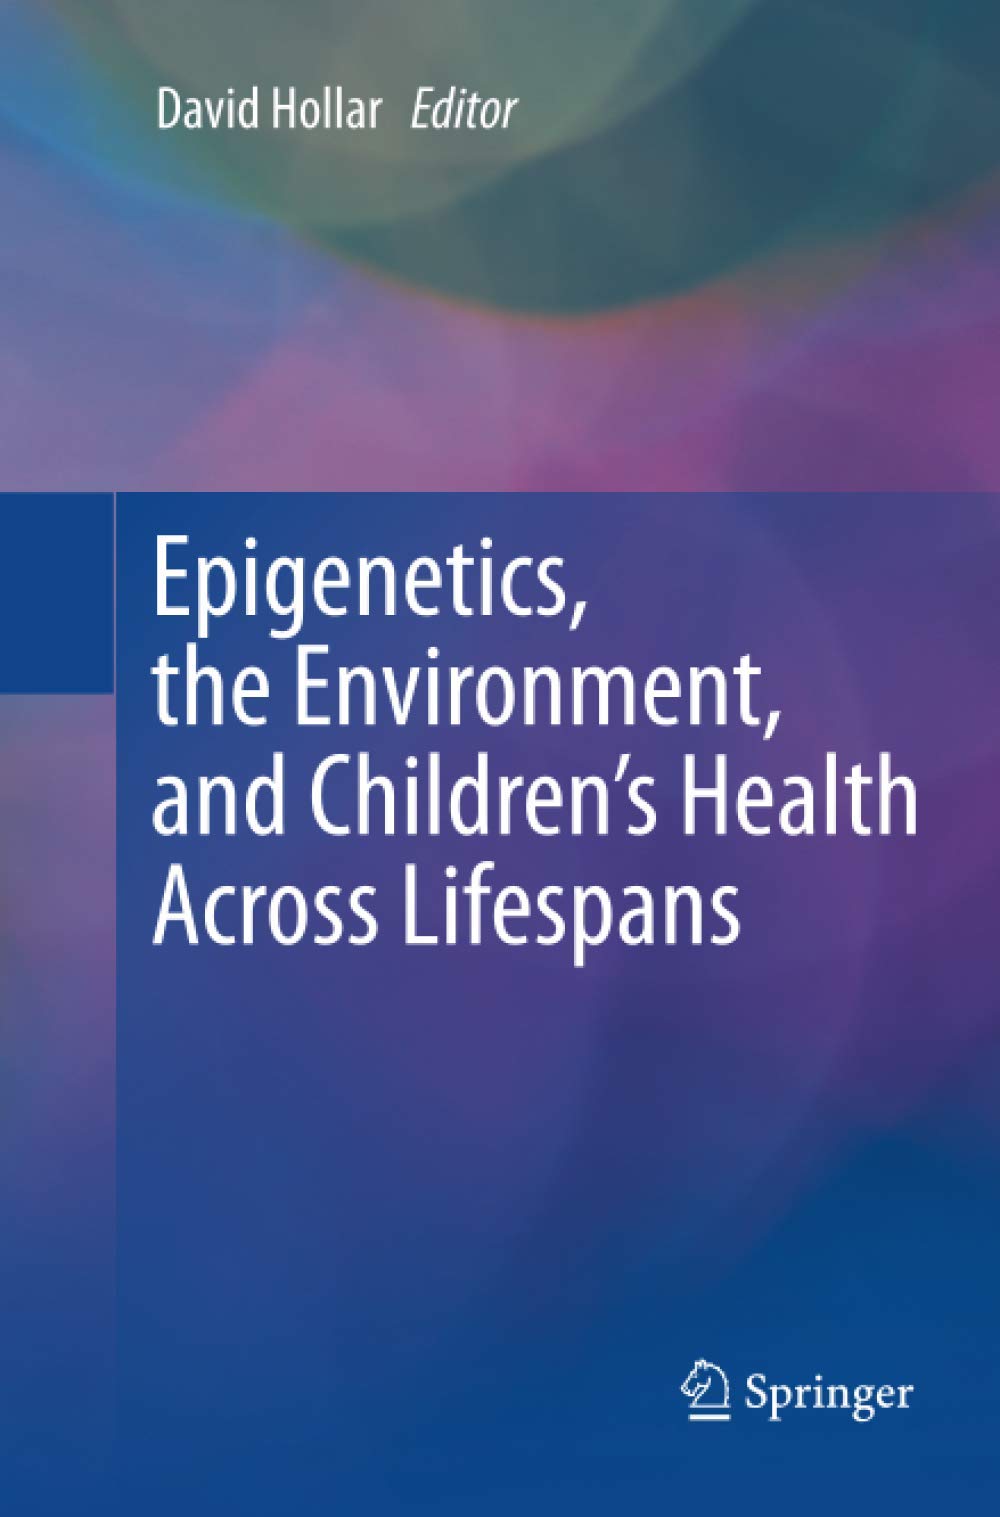 Epigenetics, the Environment, and Children’s Health Across Lifespans